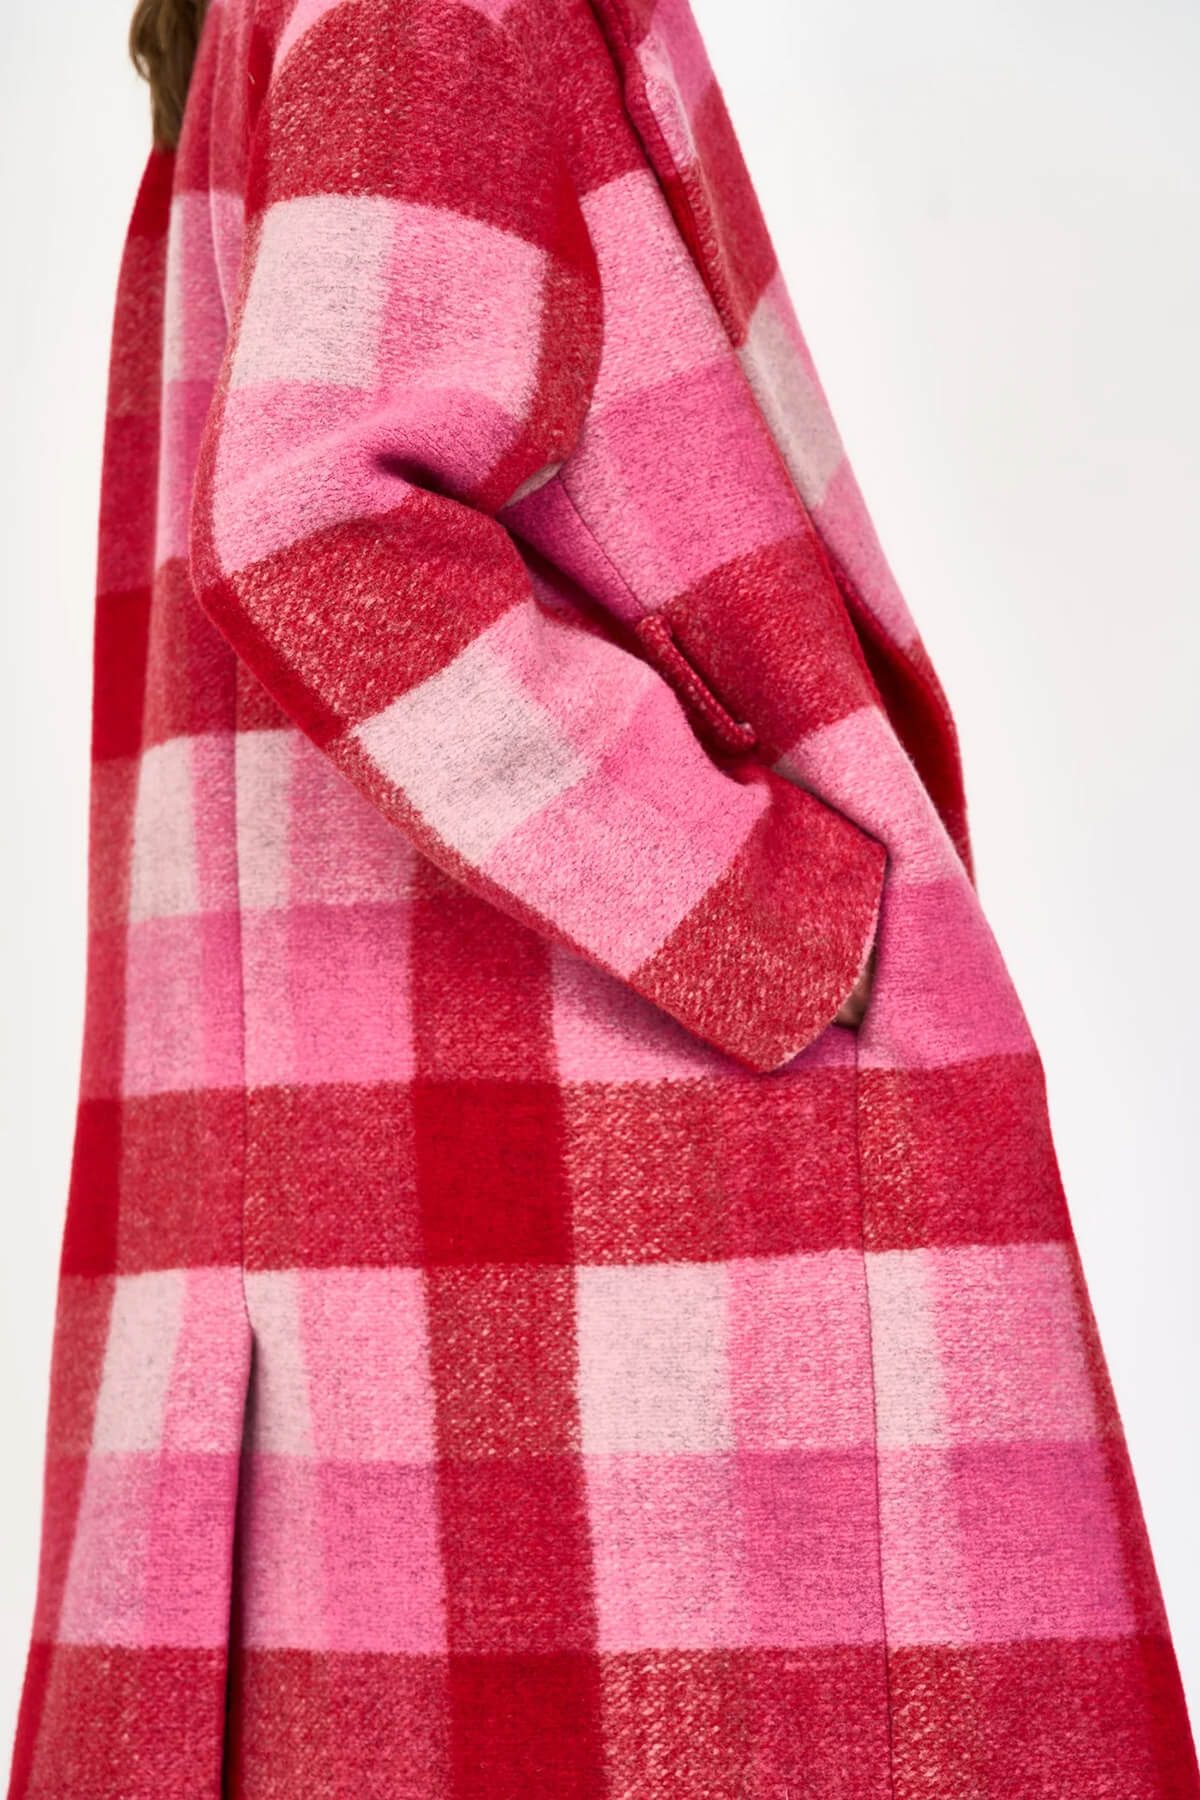 christy lynn pink and red tartan coat